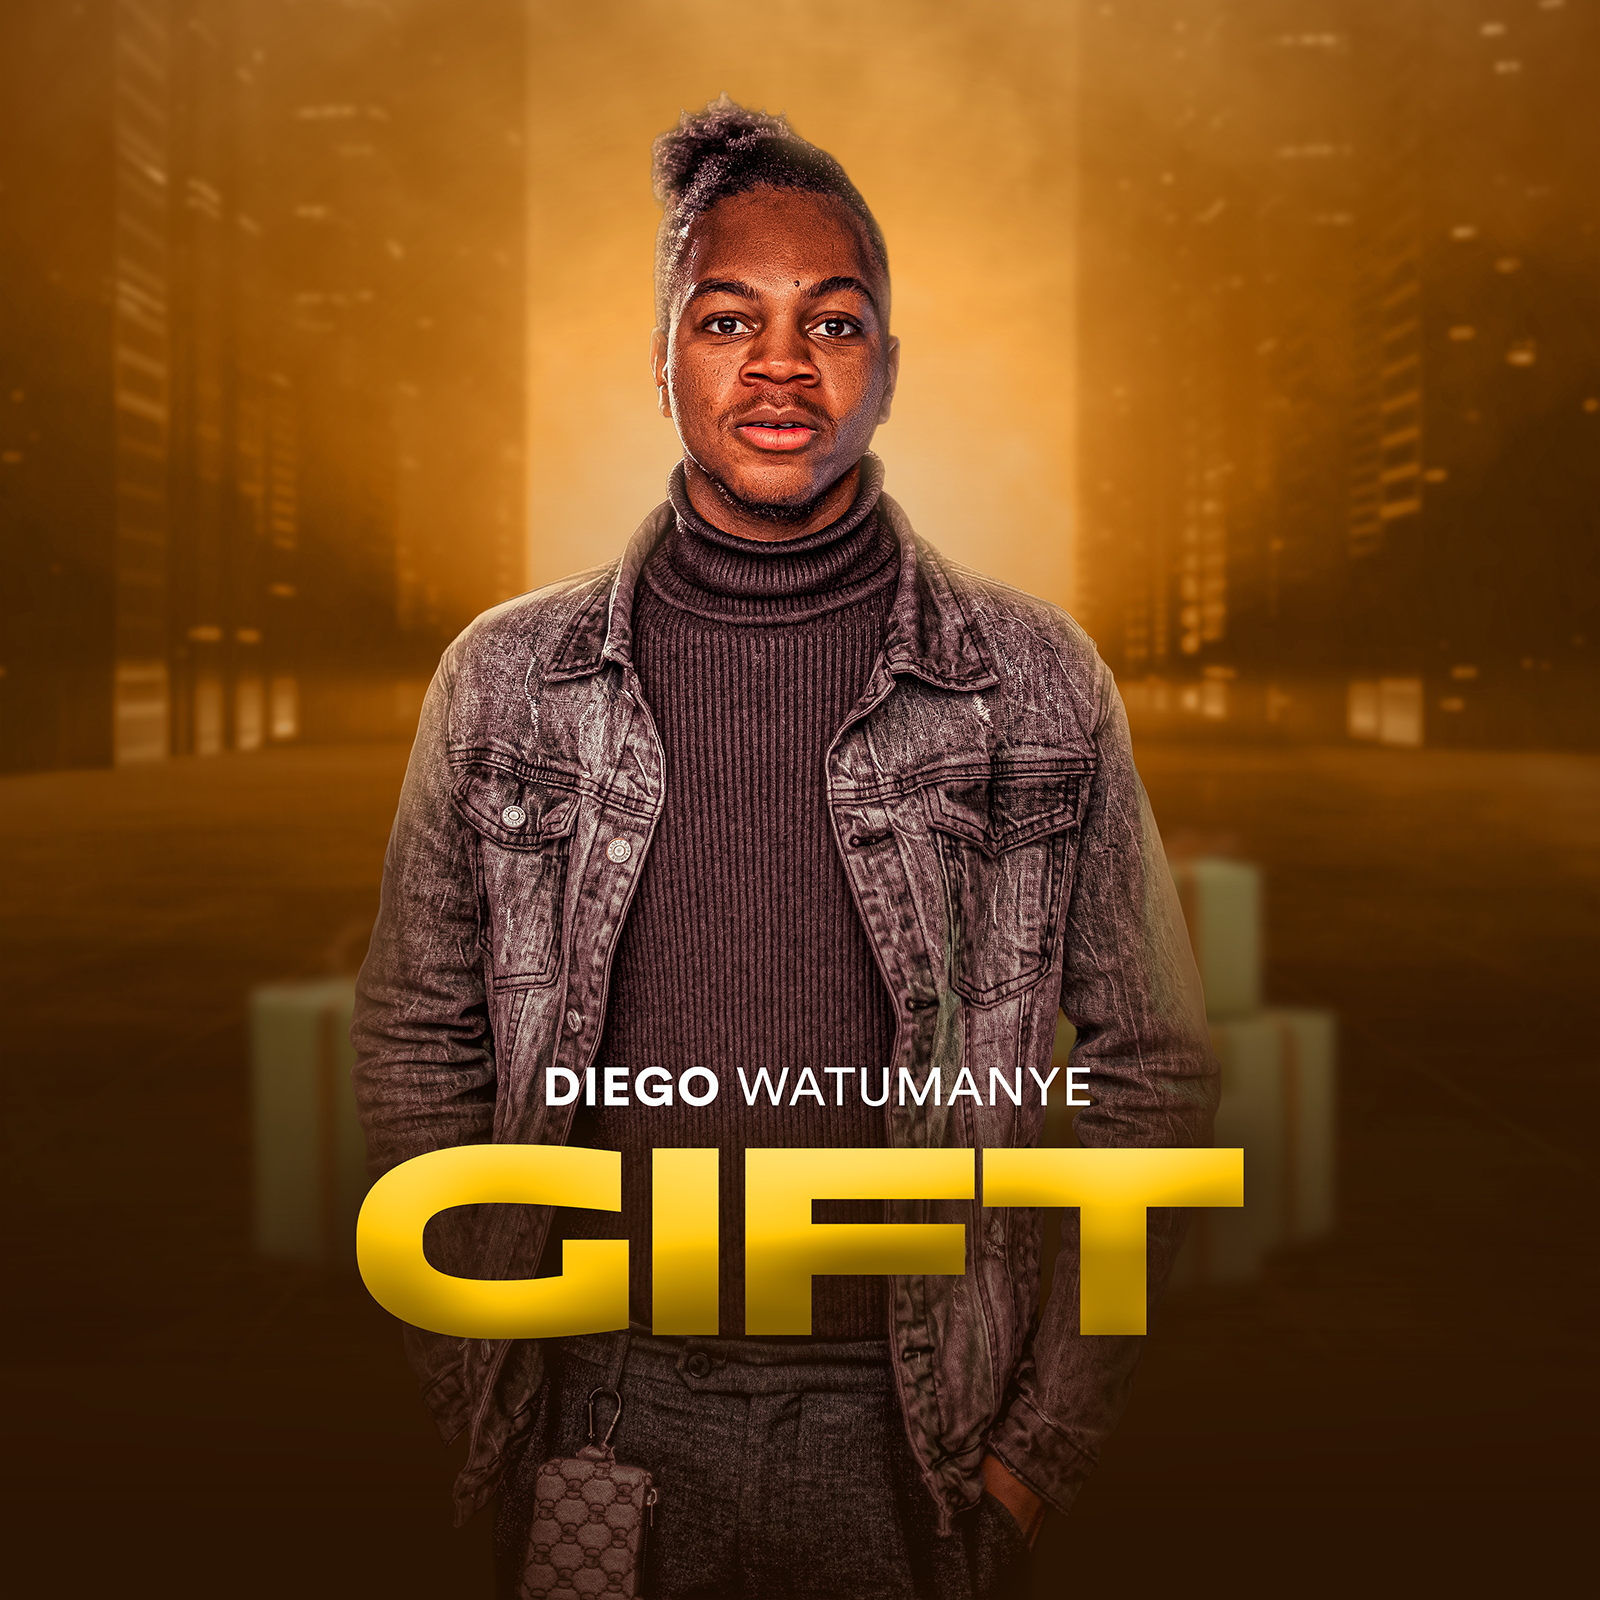 Diego Watumanye - Gifted by Akometsi Entertainment | Album